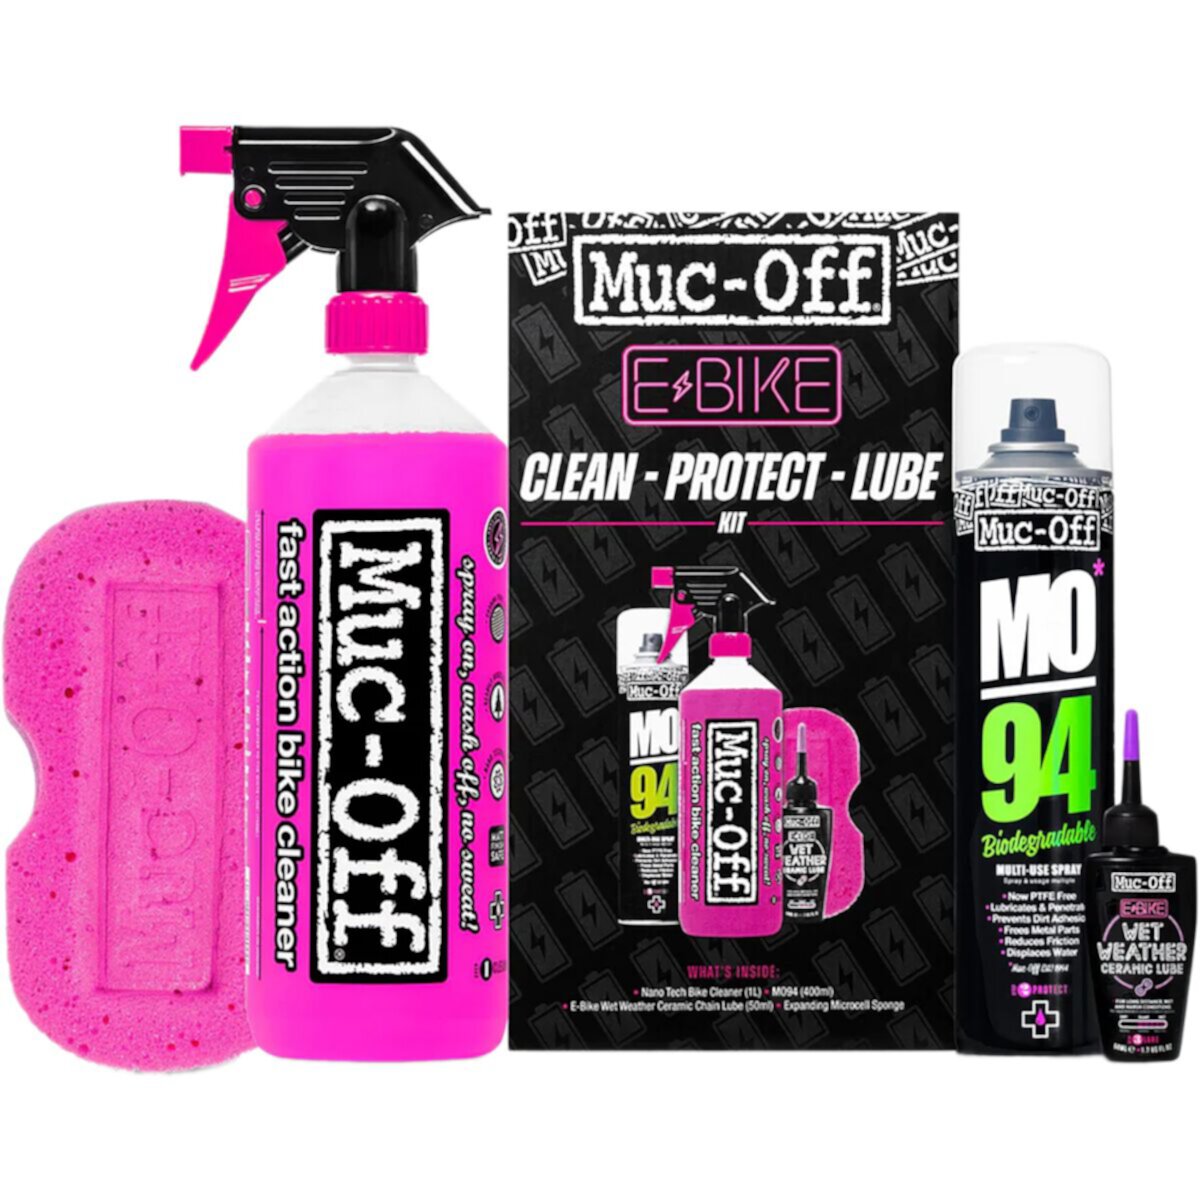 eBike Clean + Protect + Lube Kit Muc-Off